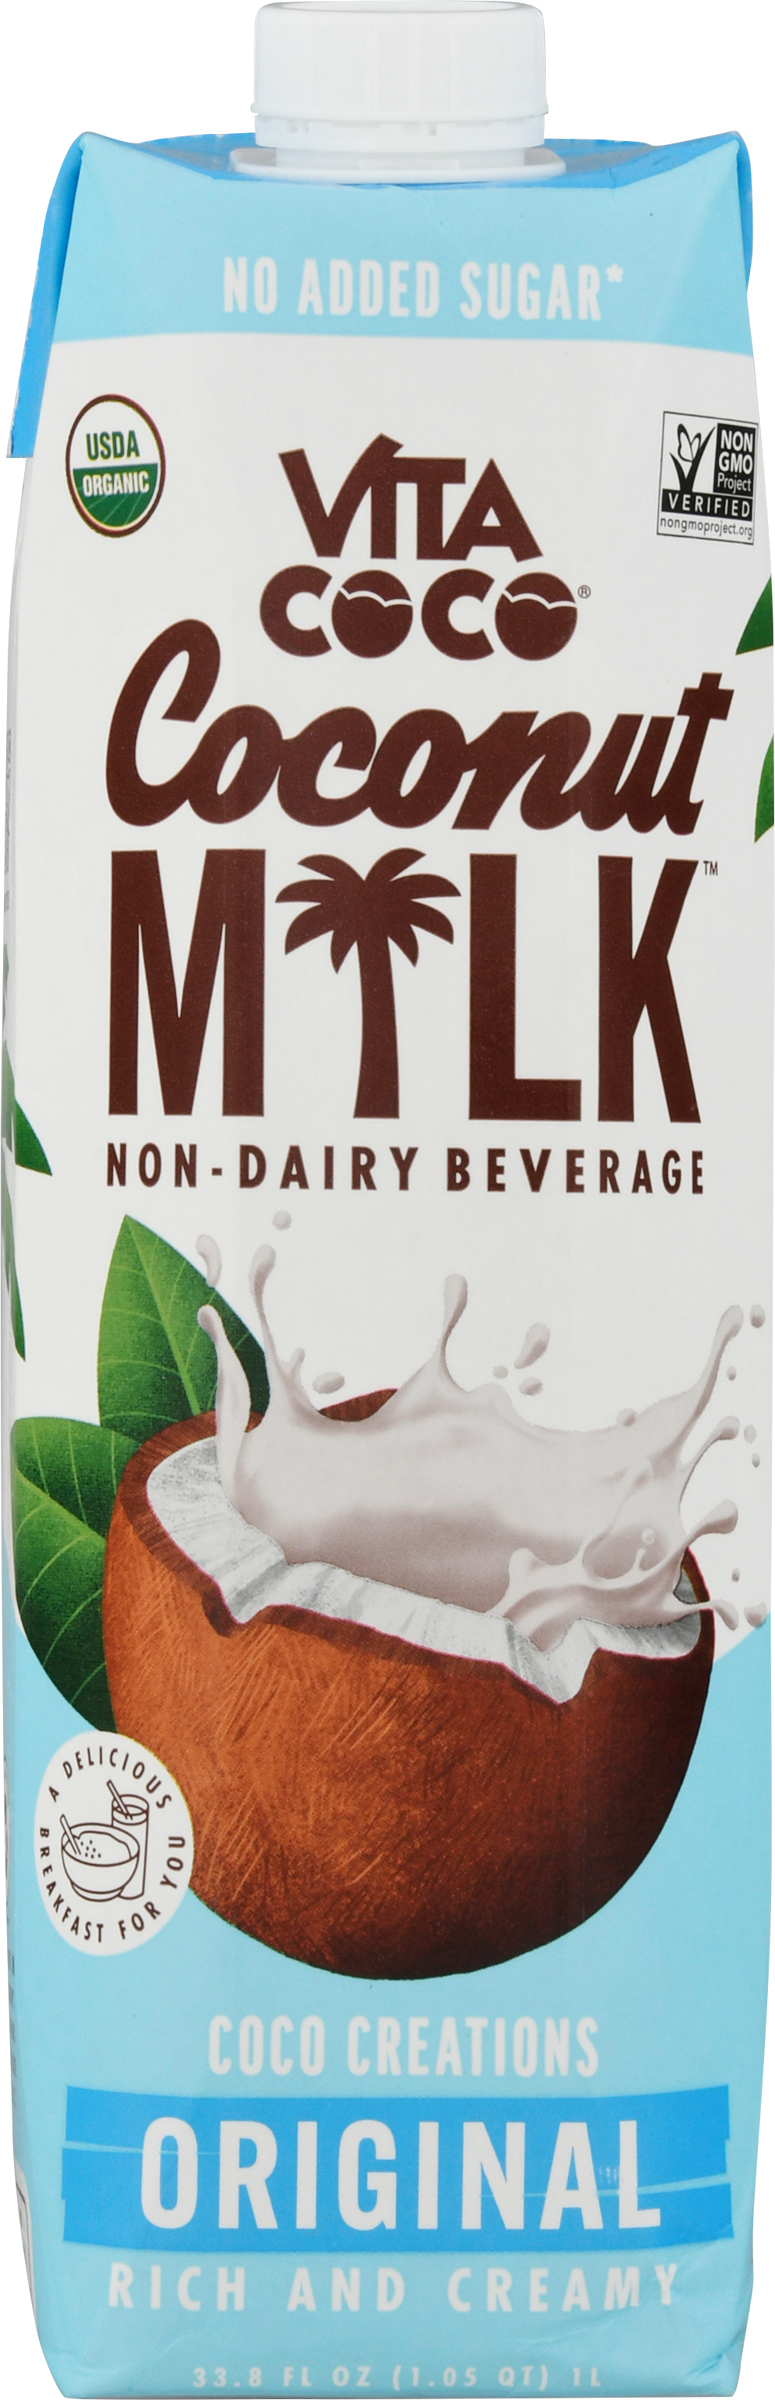 Beverage, Non-Dairy, Organic, Original, Coconut Milk image